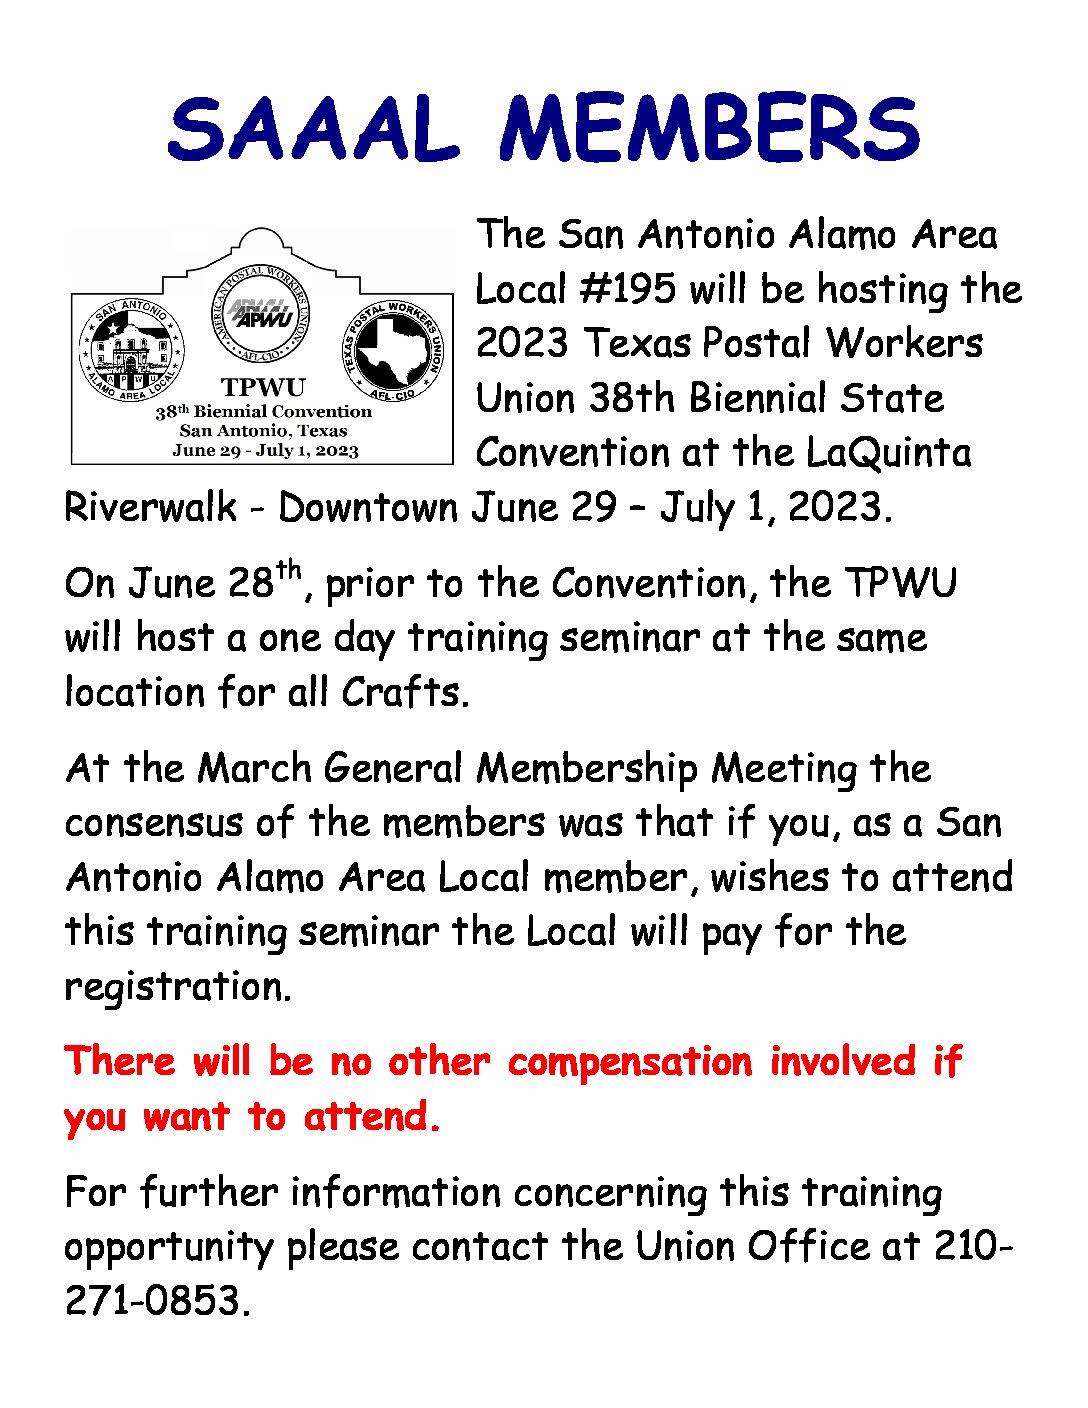 TPWU Convention Training Workshop for SAAAL Members - 